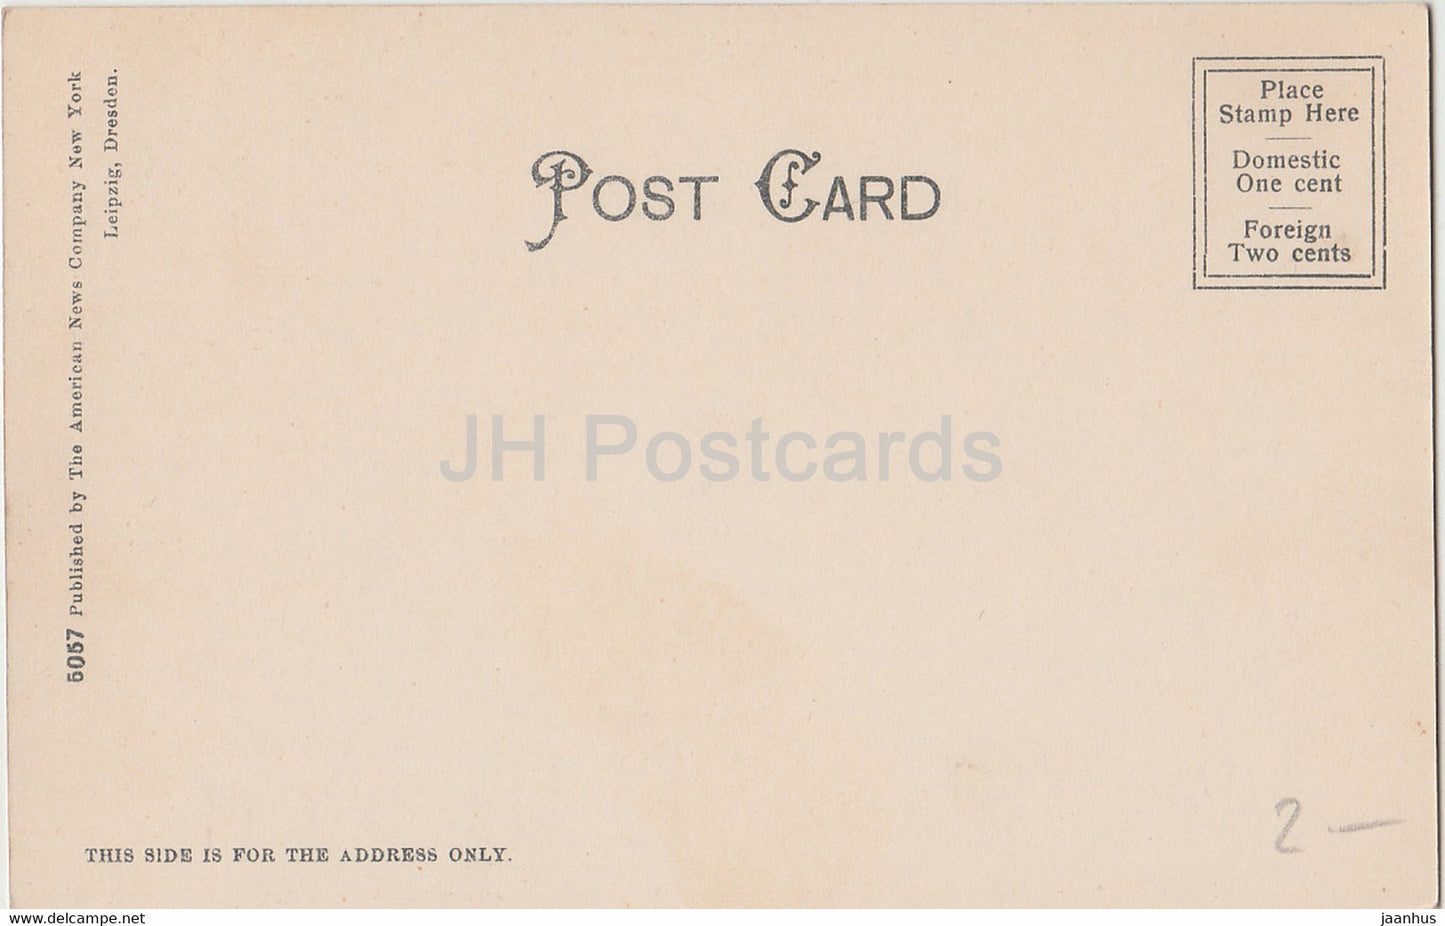 New York - Williamsburg Bridge - 5057 - carte postale ancienne - États-Unis - USA - inutilisé